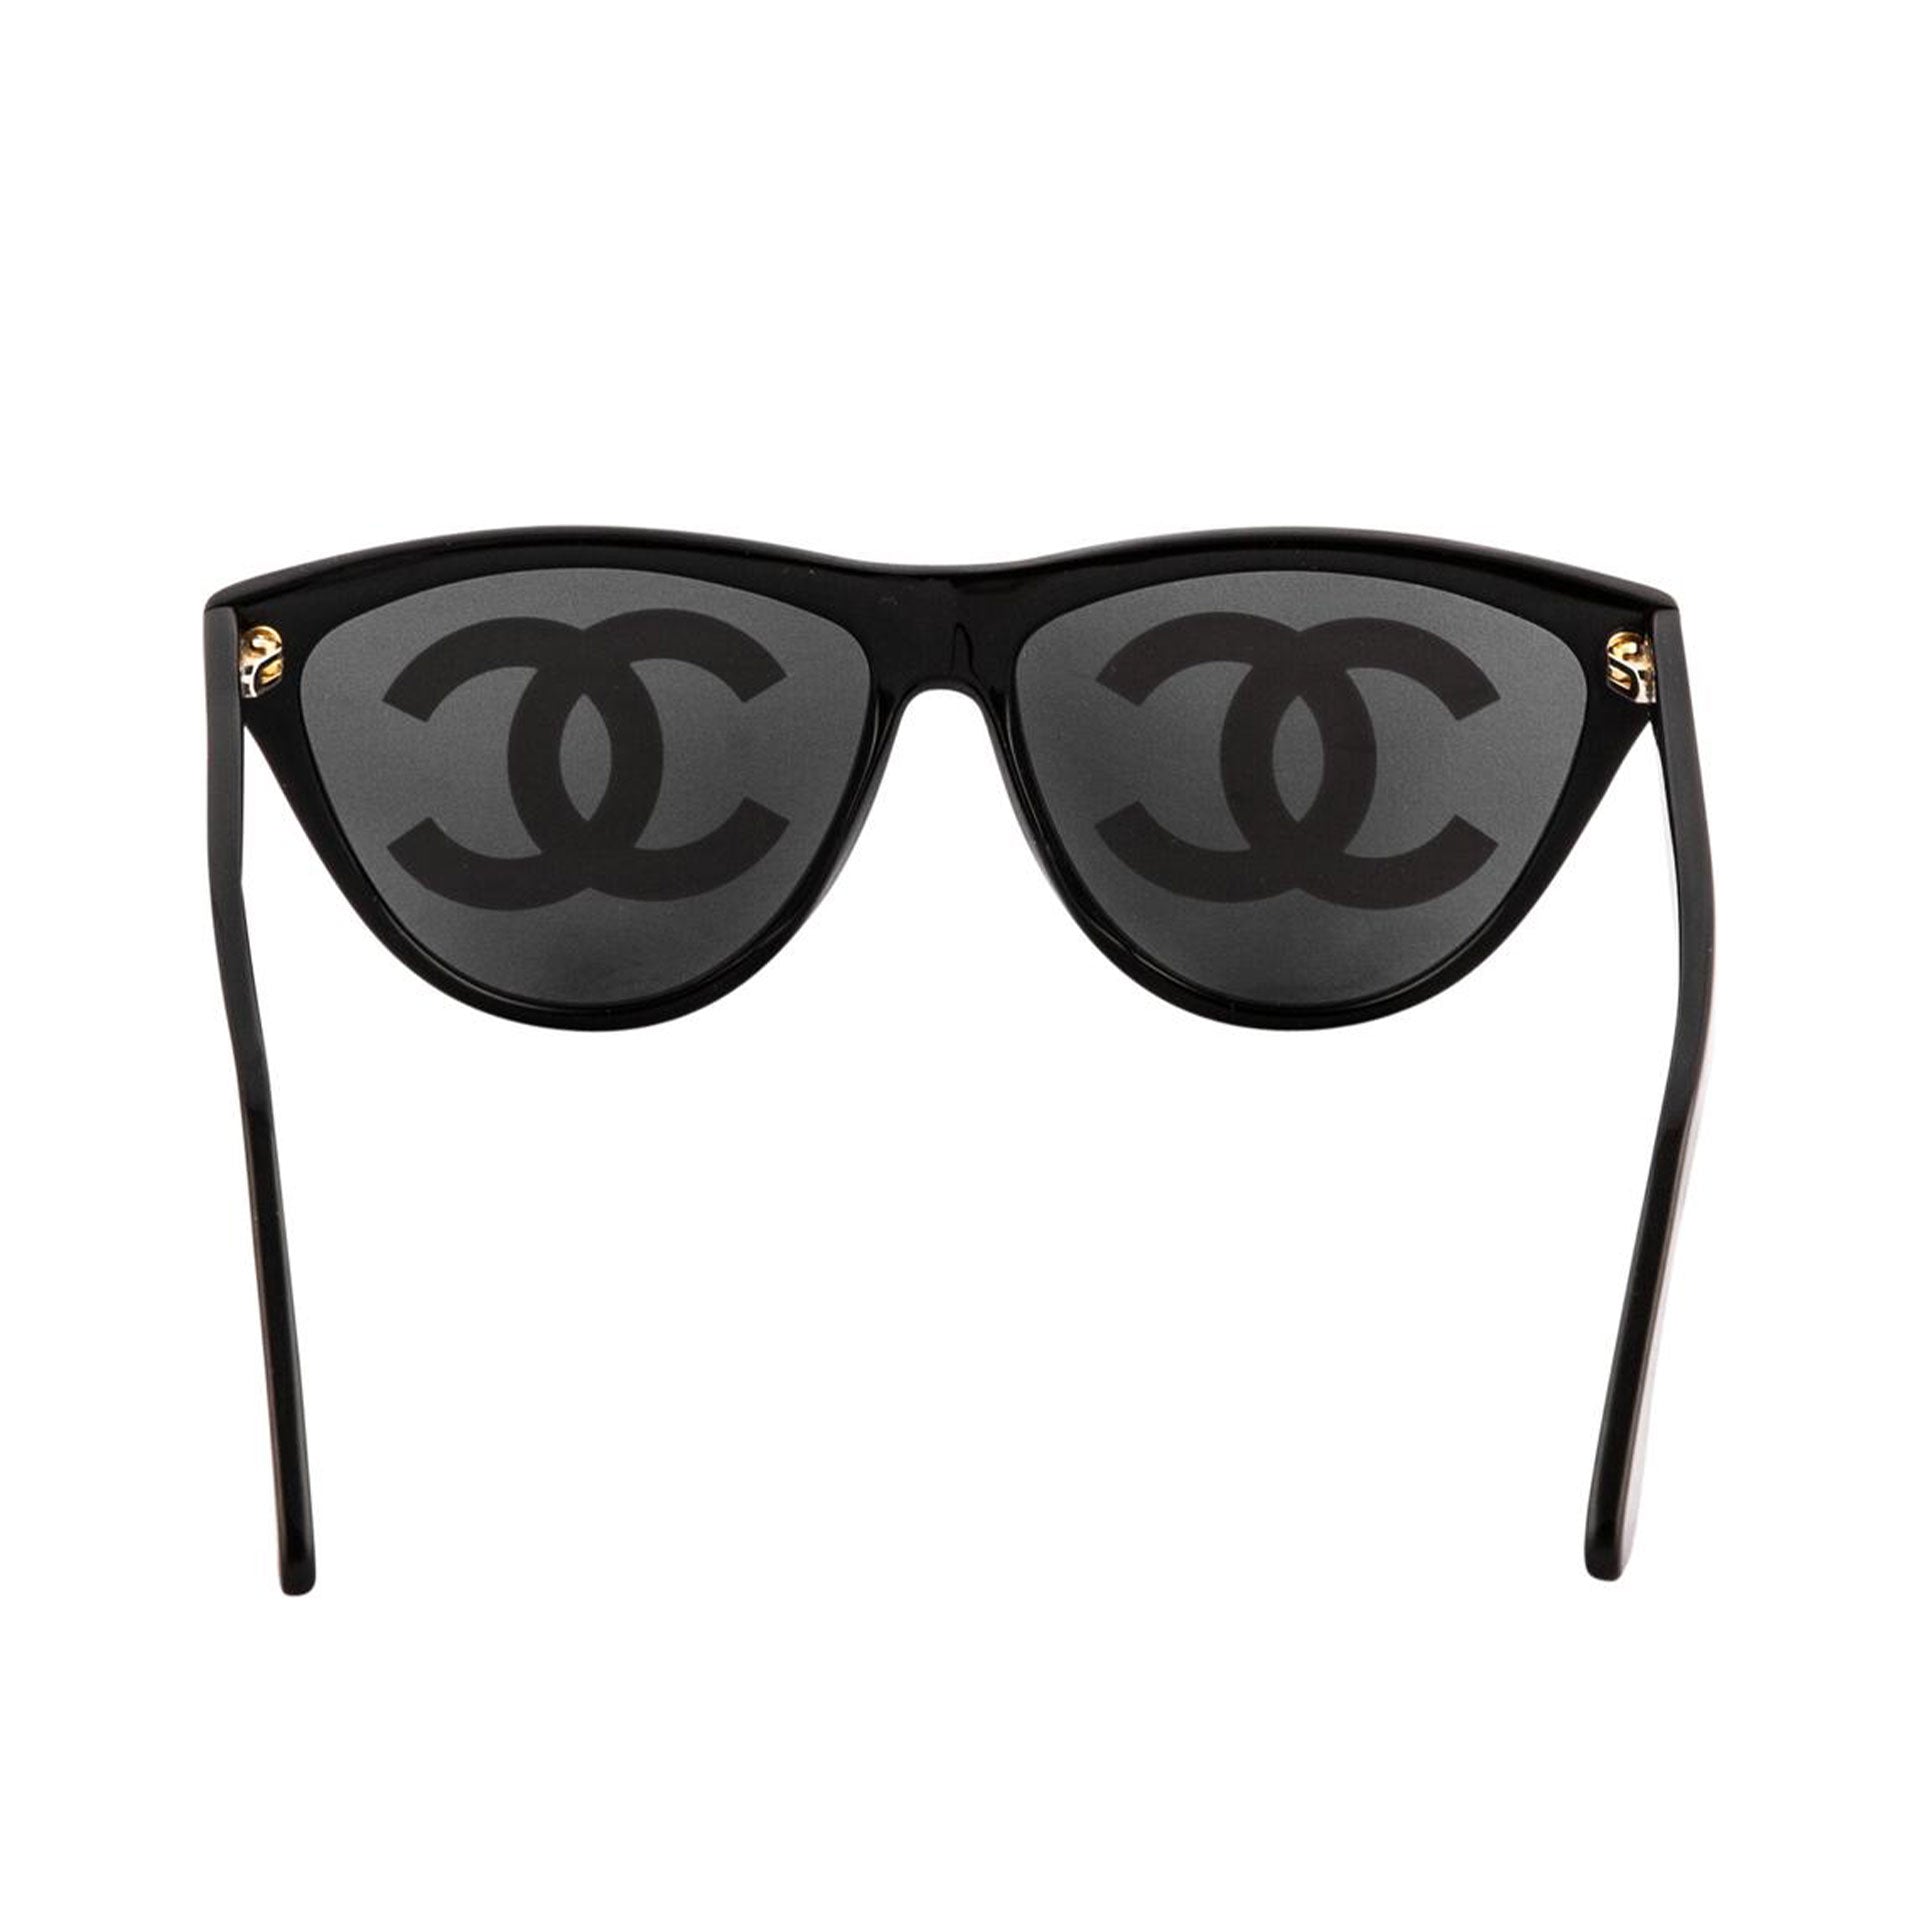 CHANEL Vintage CC Logos Round Sunglasses Eyewear Black 01949 94305 02764